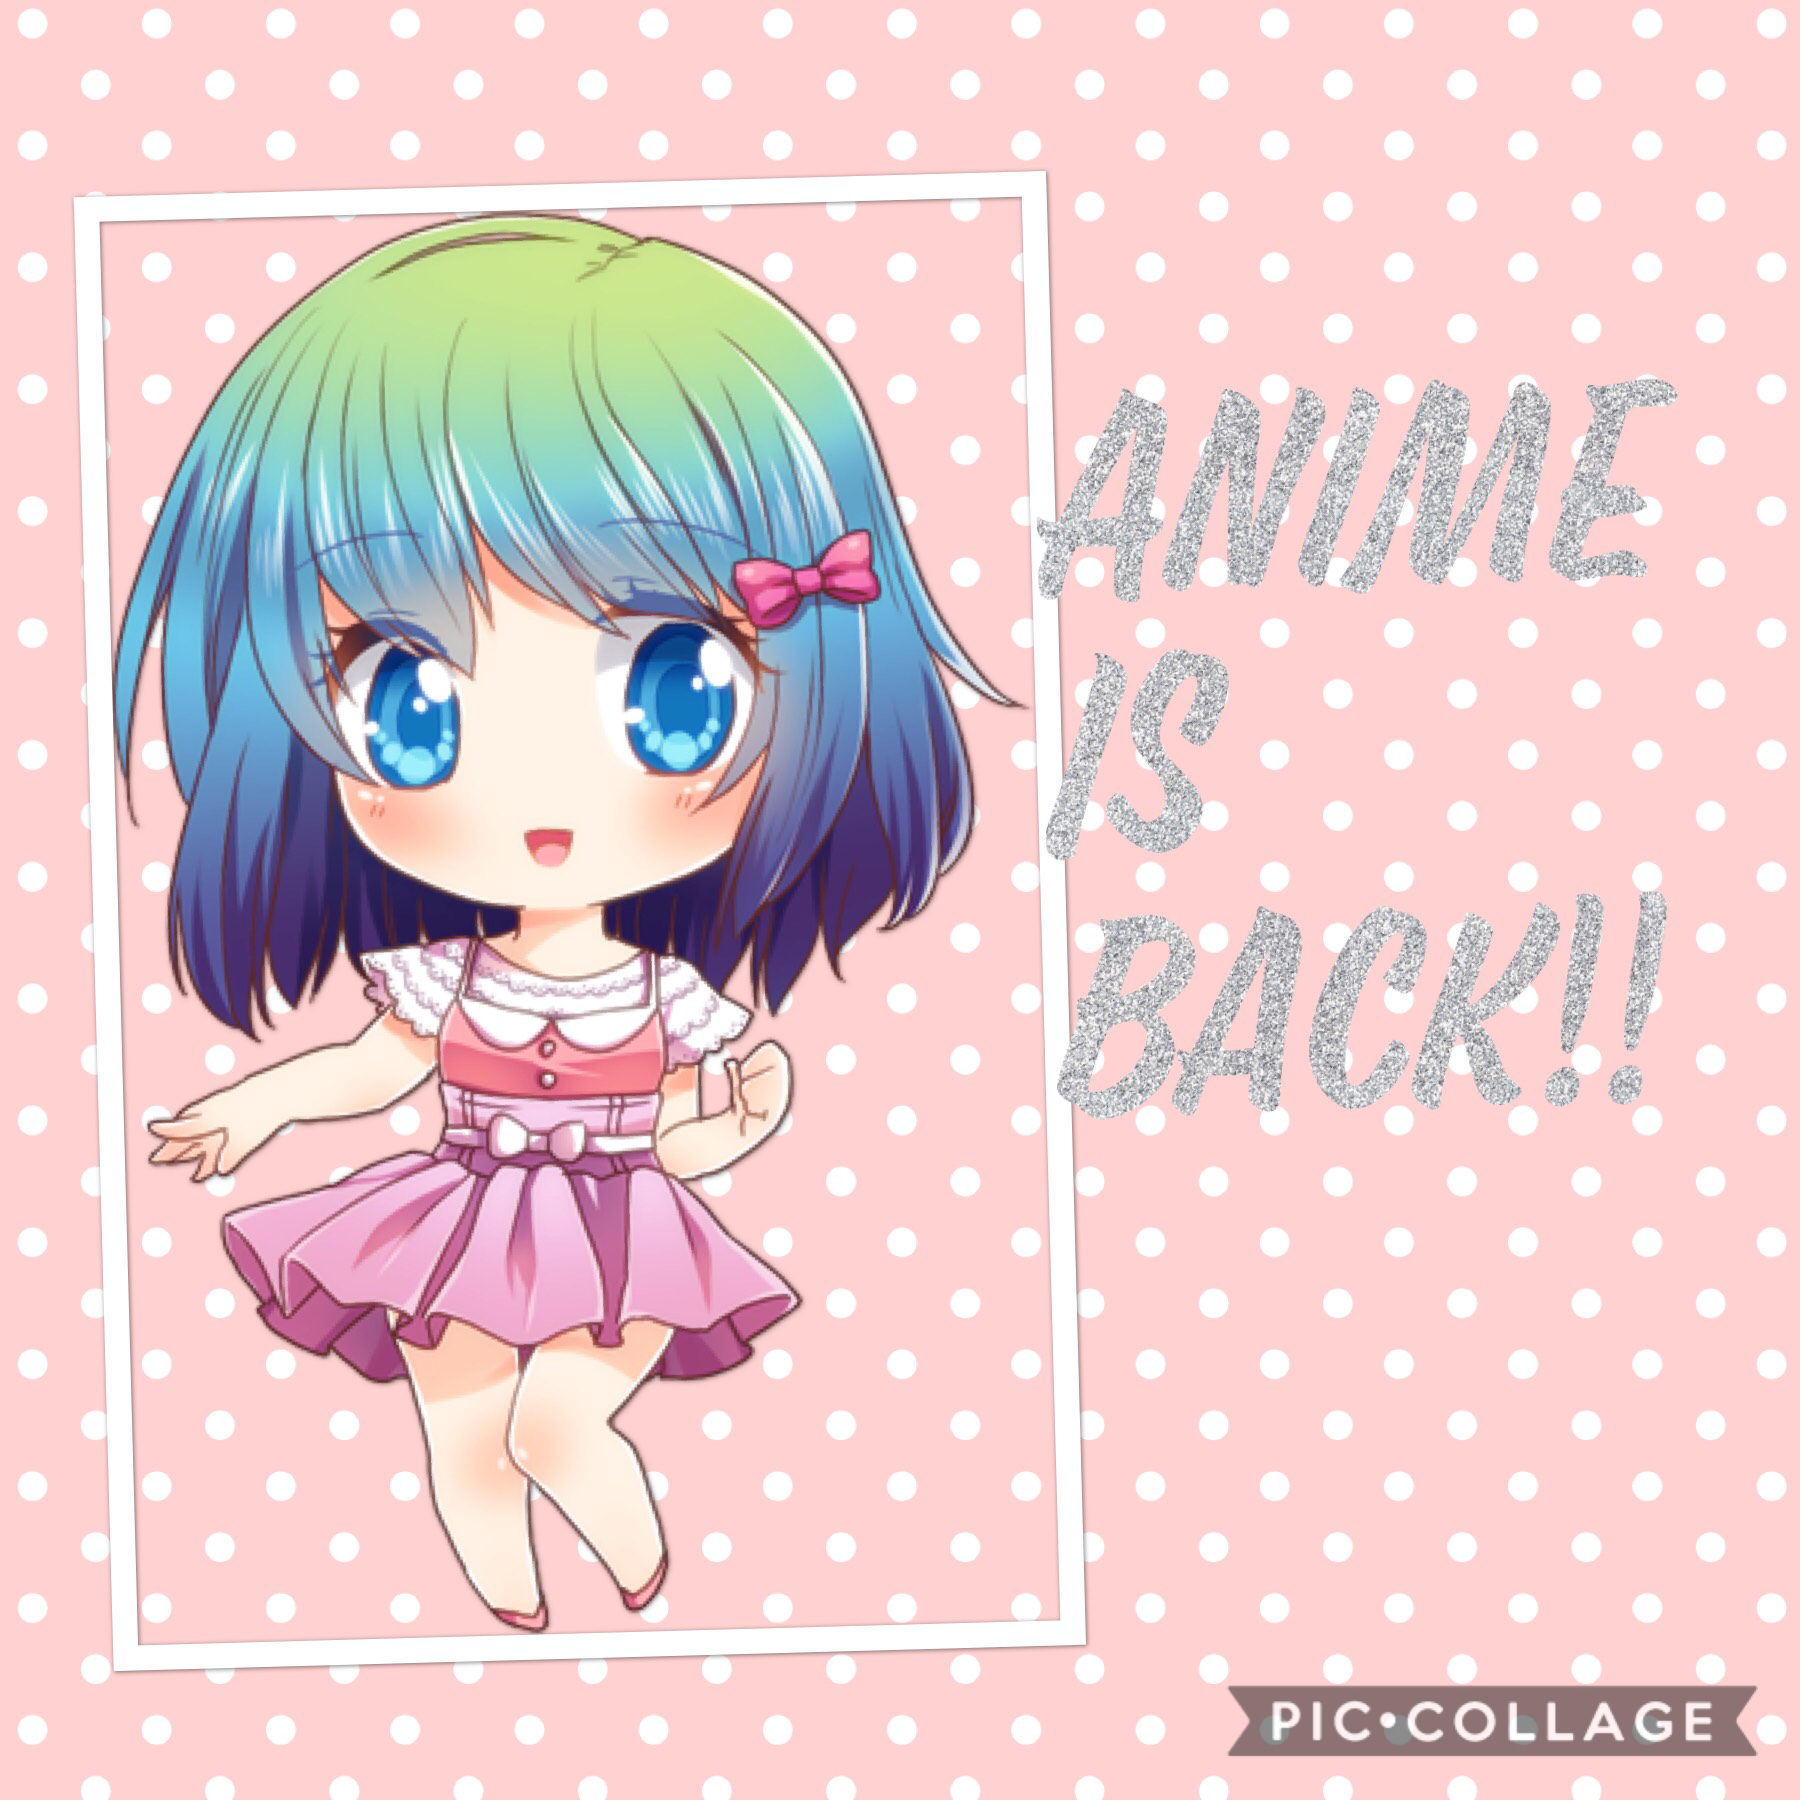 Im bringing back anime people!